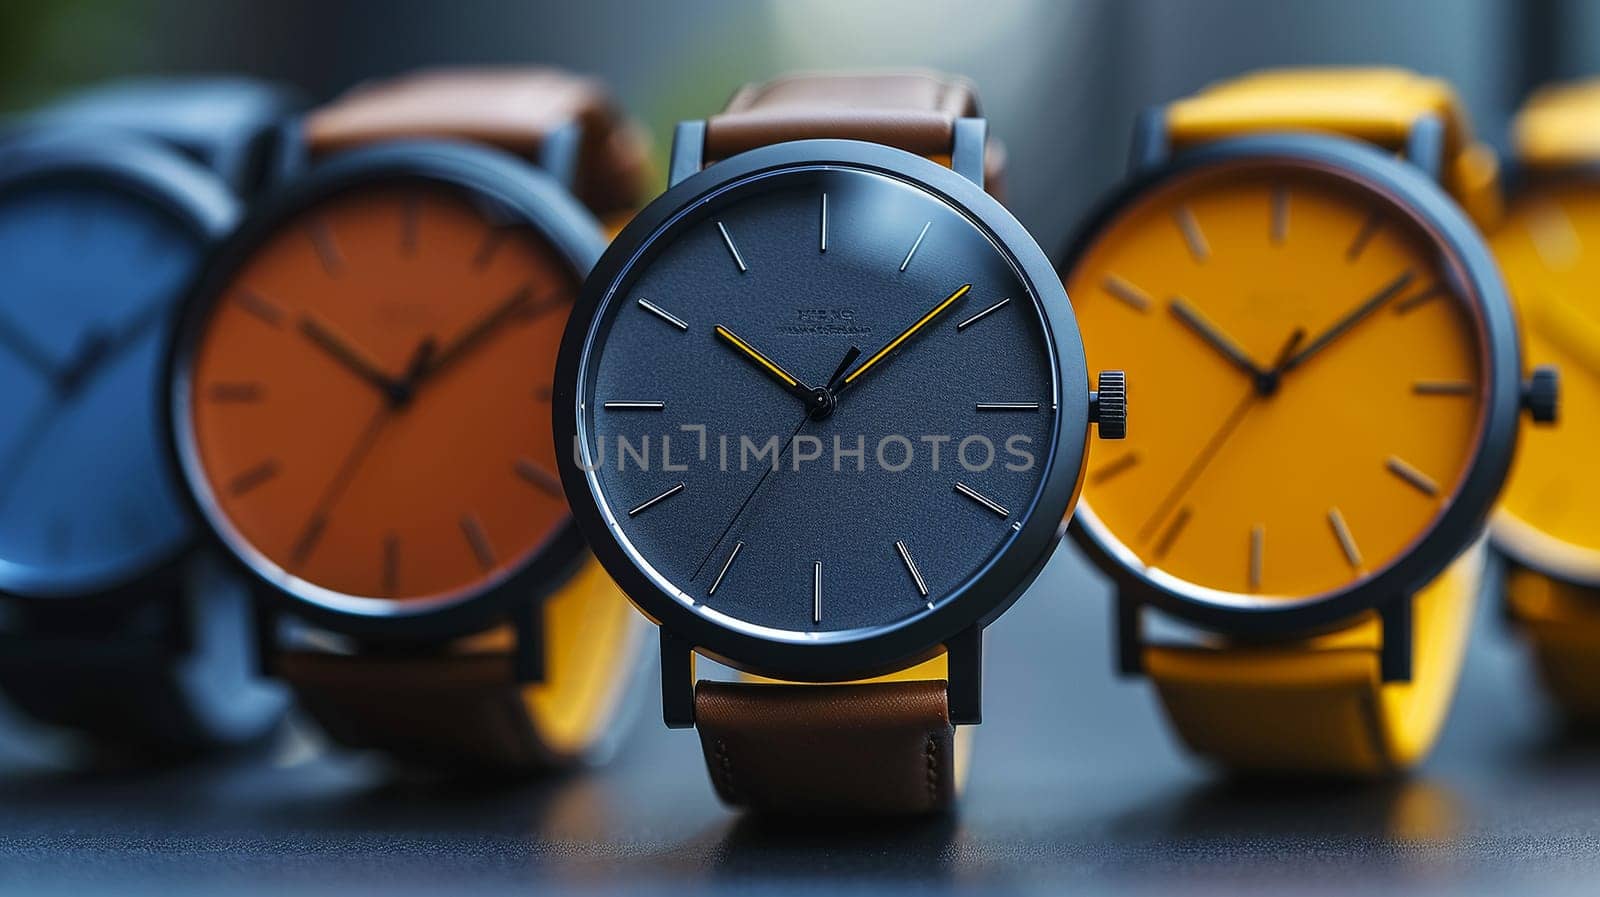 Stylish wristwatch with minimalist design, suggesting fashion and punctuality.